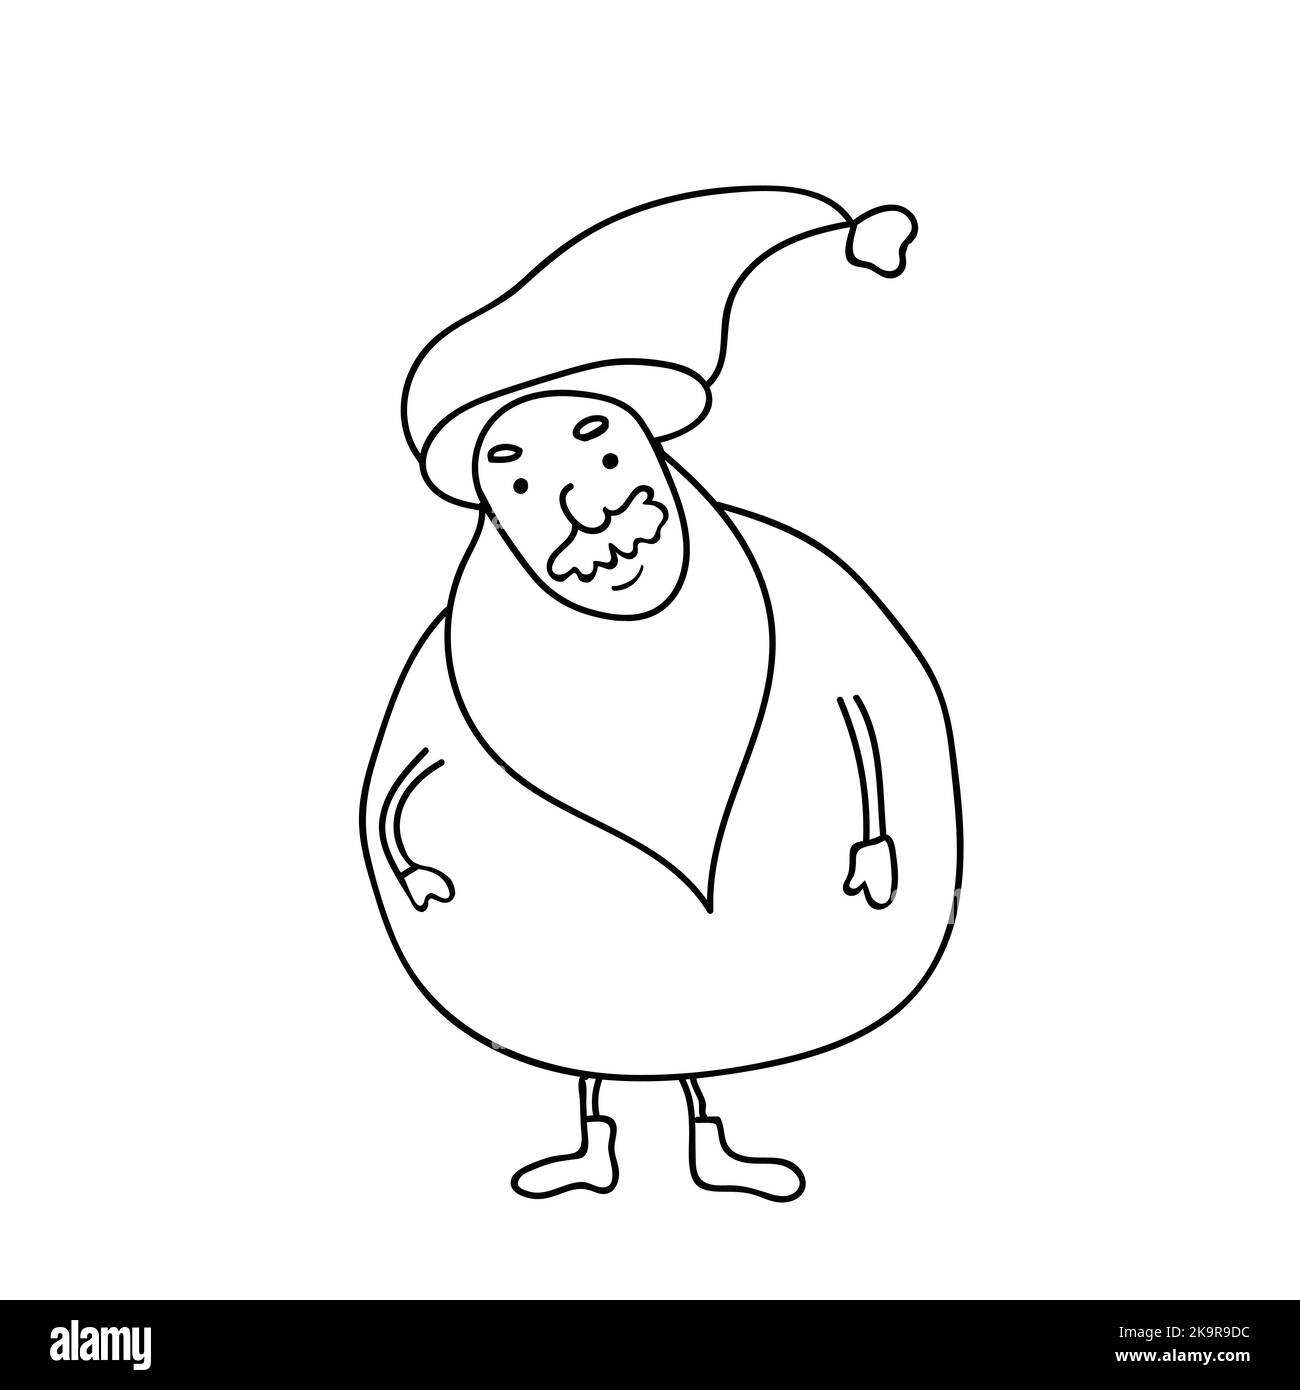 Christmas coloring book page. Funny hand drawn Santa illustration Stock Vector